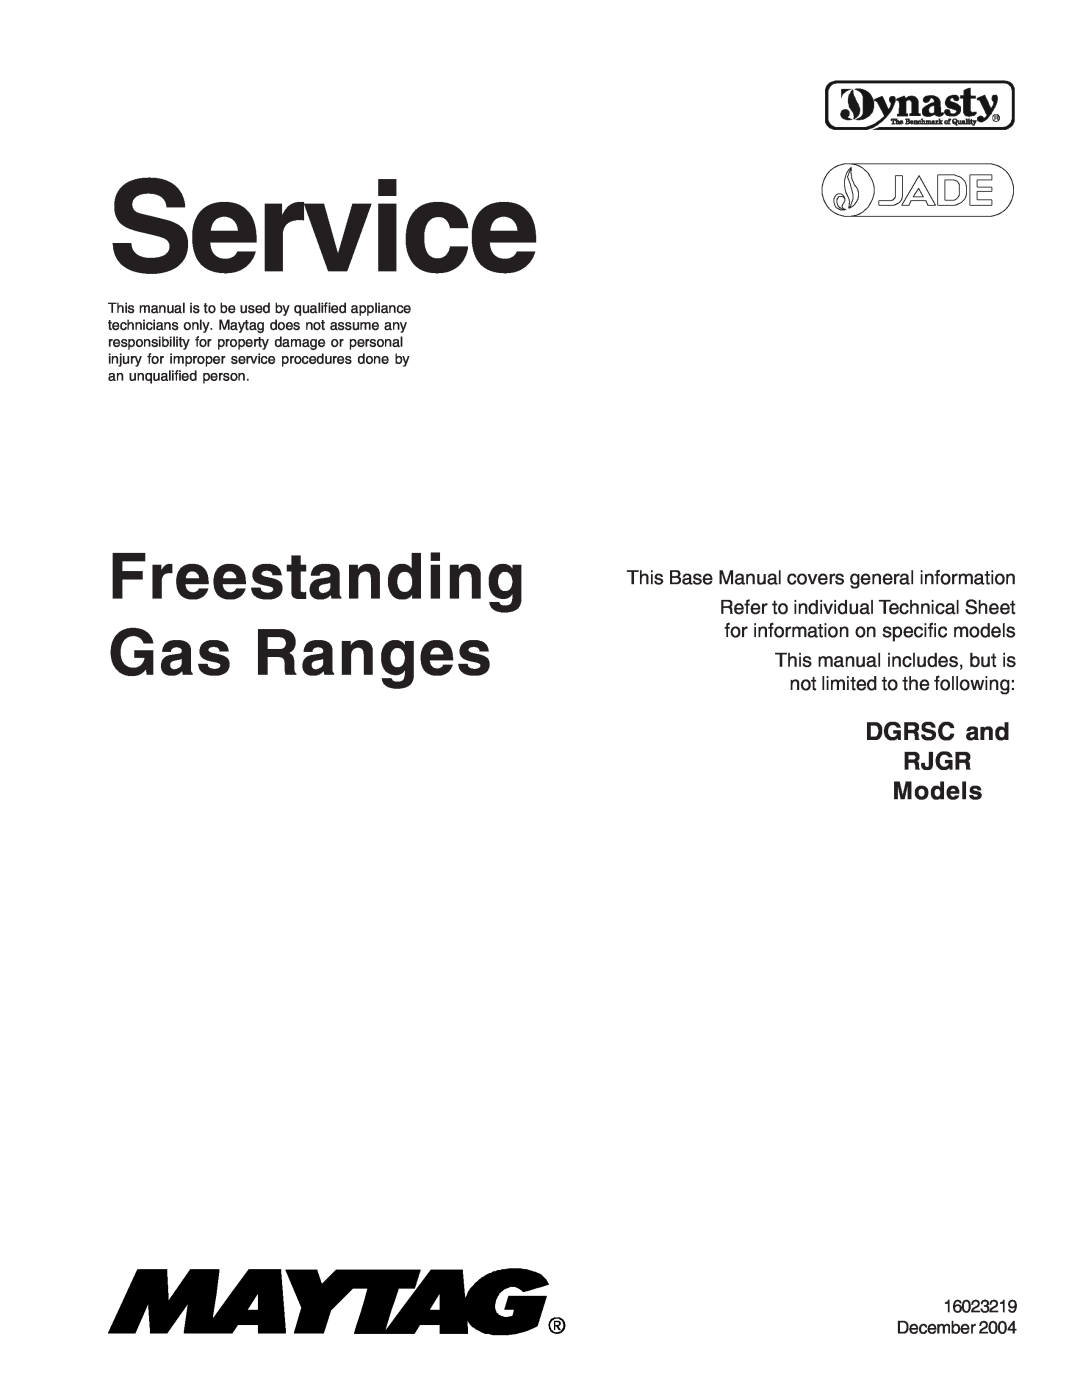 Maytag manual Freestanding Gas Ranges, DGRSC and RJGR Models, Service 